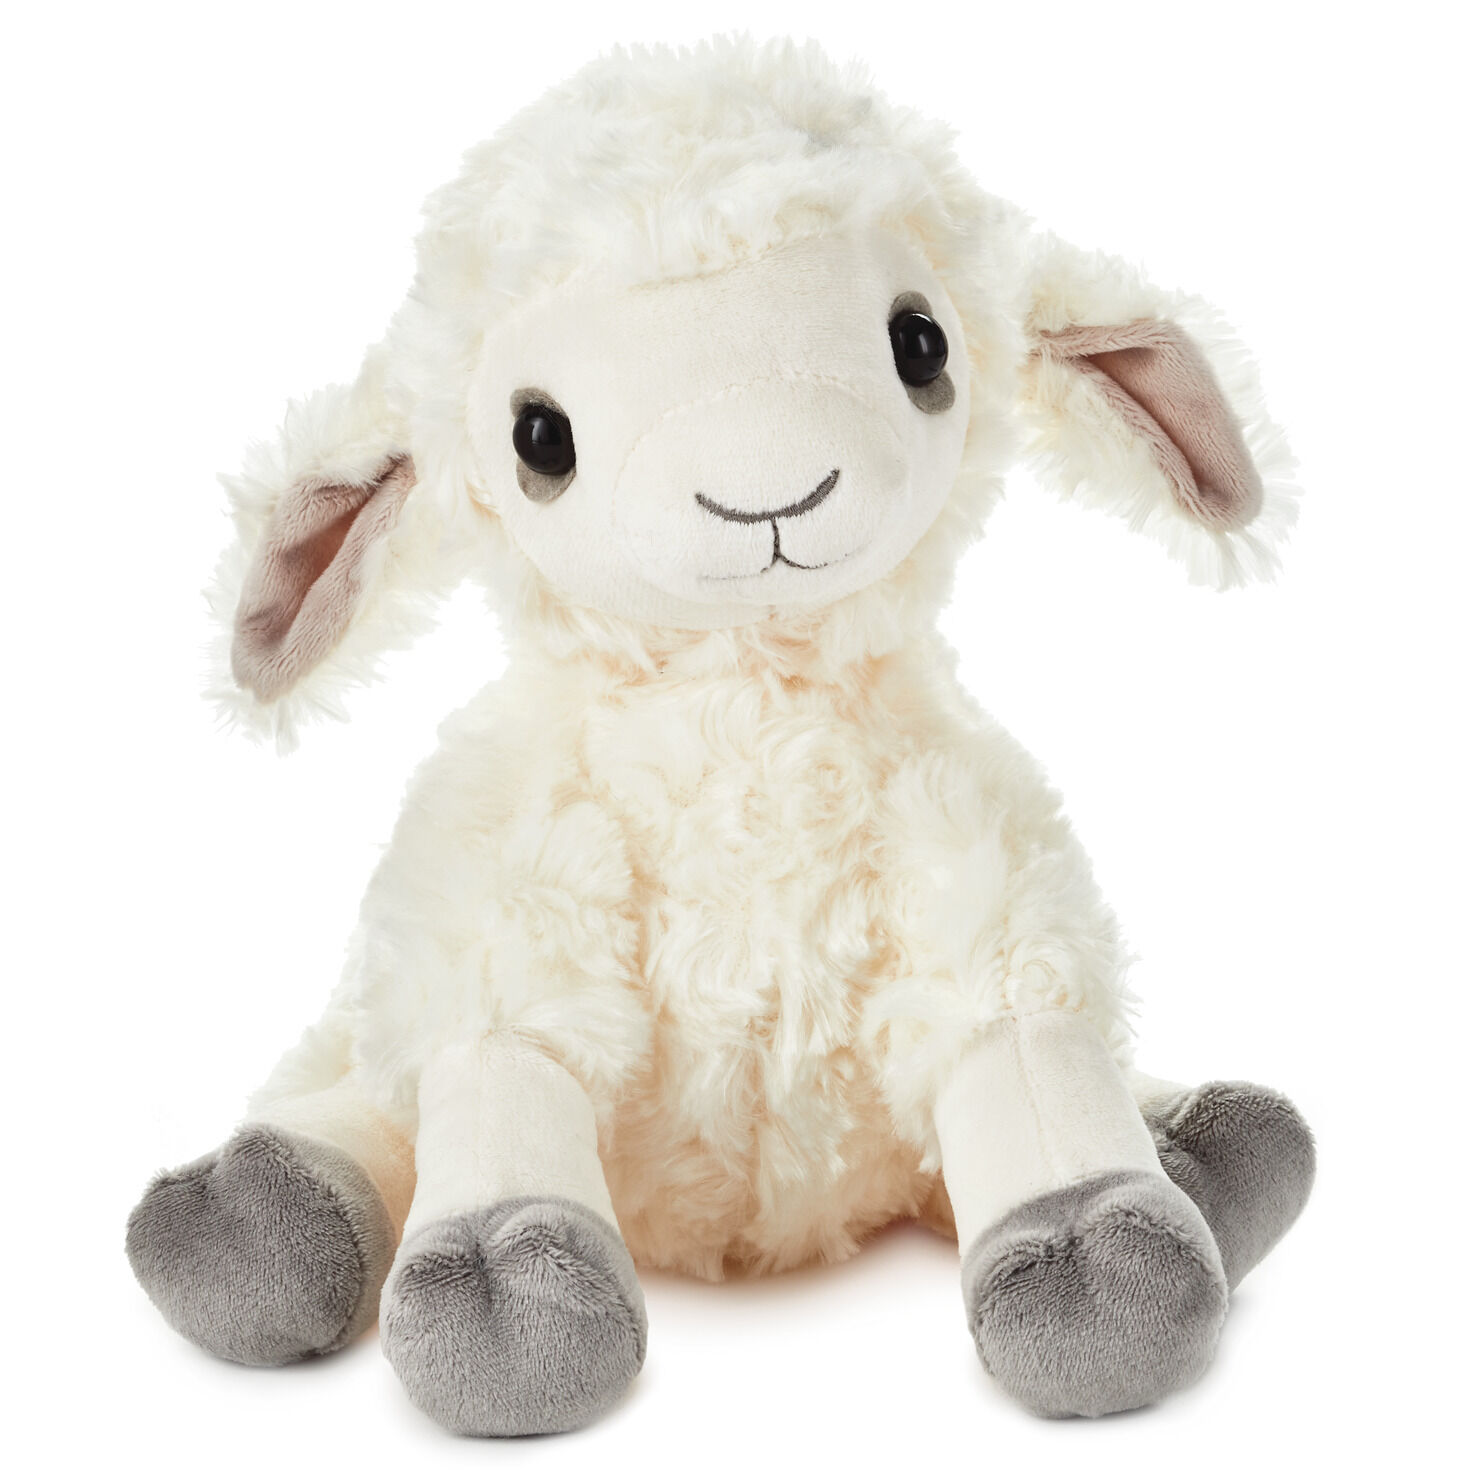 Baby Lamb Stuffed Animal, 